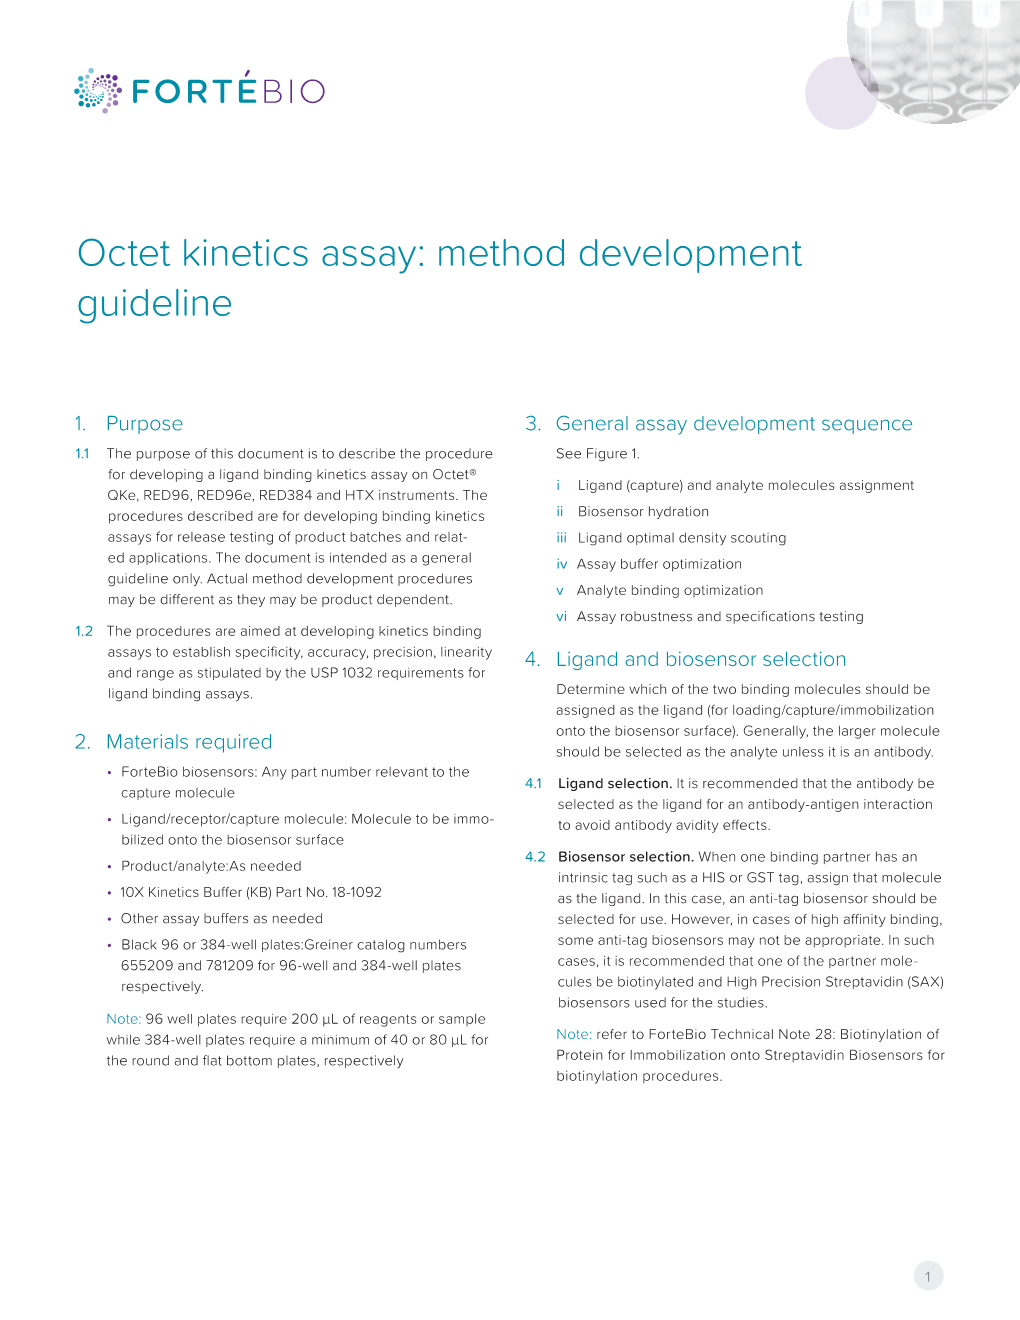 Octet Kinetics Assay: Method Development Guideline | Fortebio